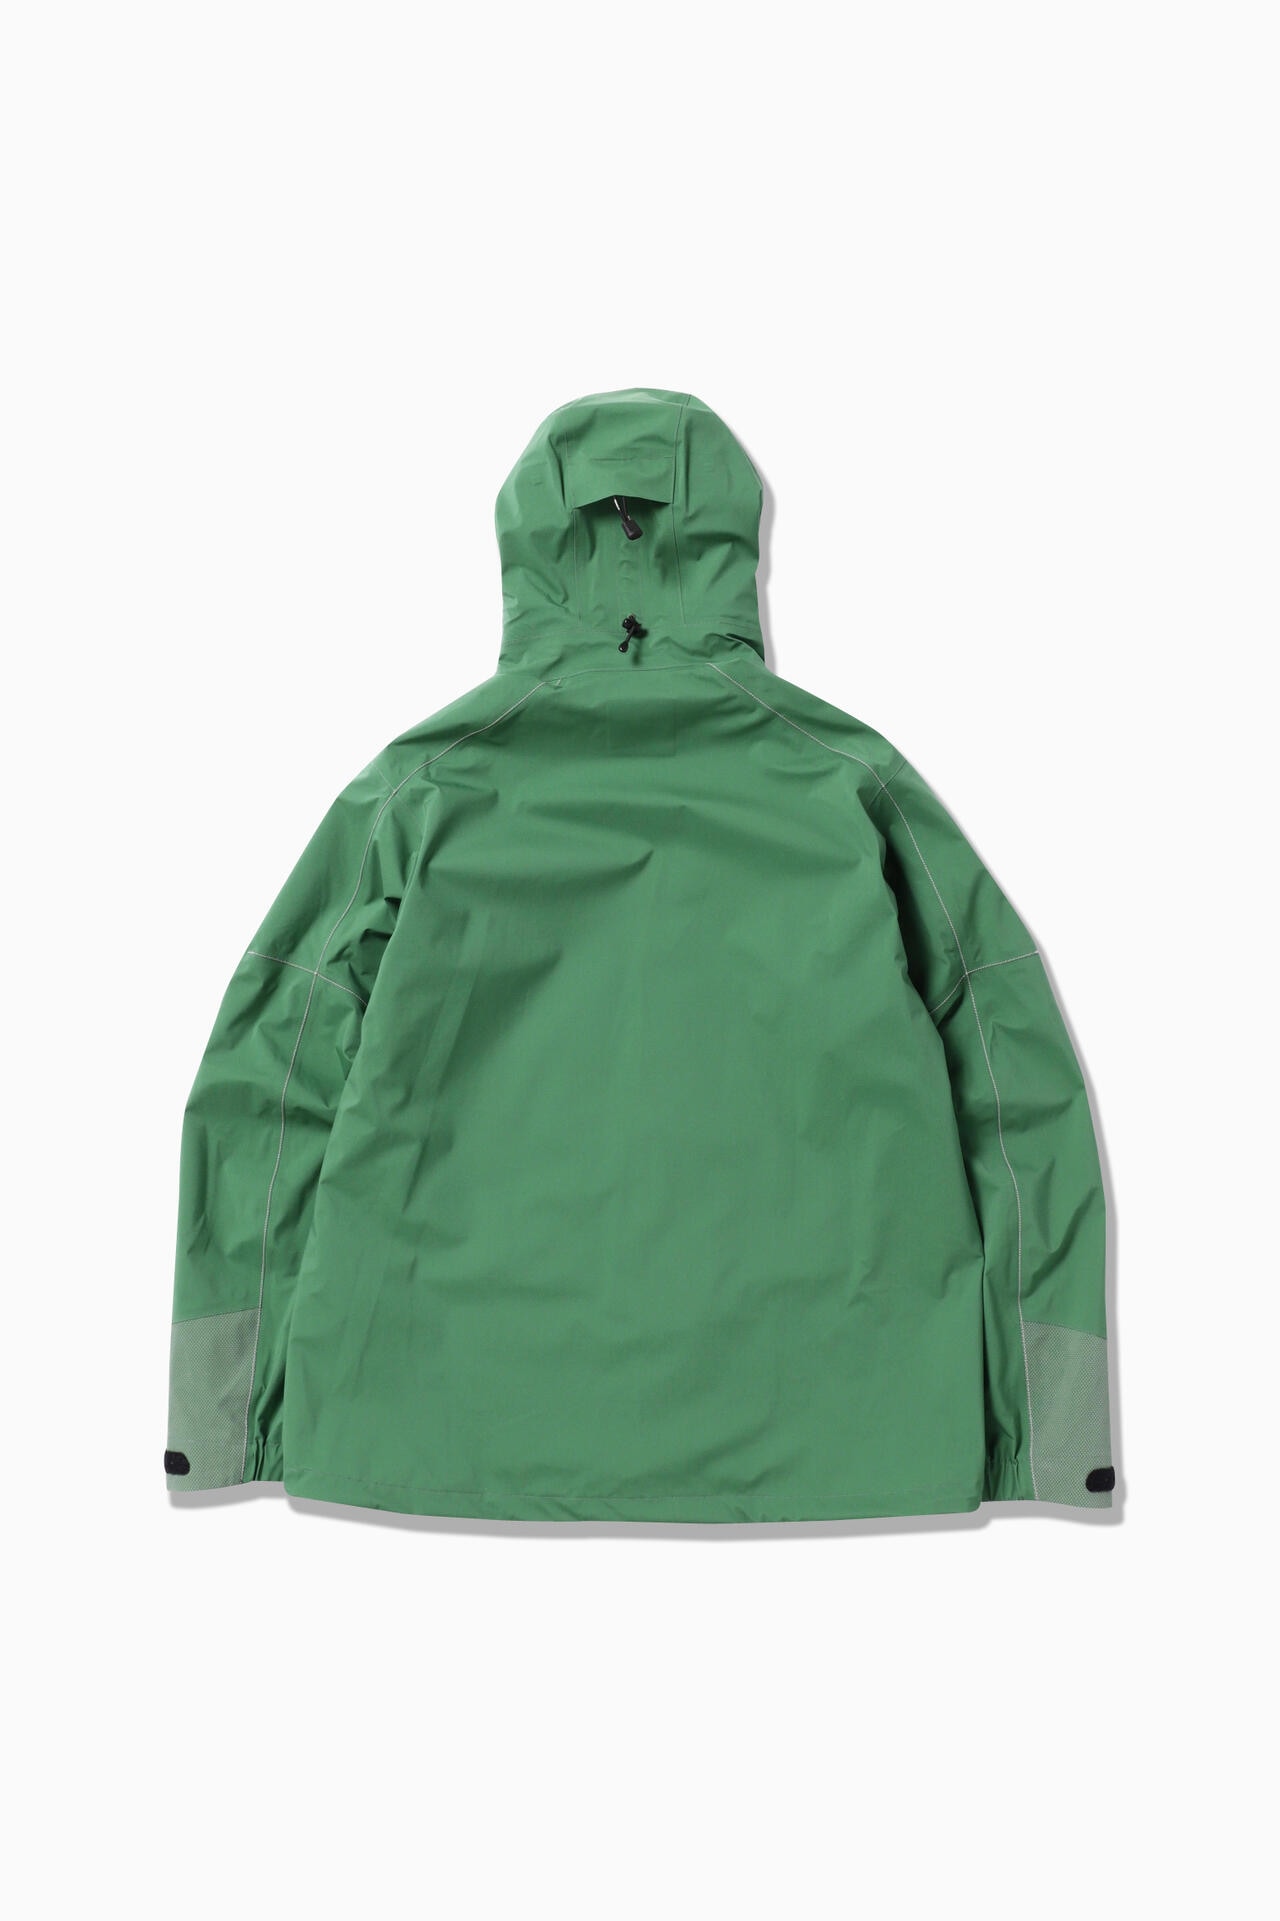 PERTEX SHIELD rain jacket | outerwear | and wander ONLINE STORE